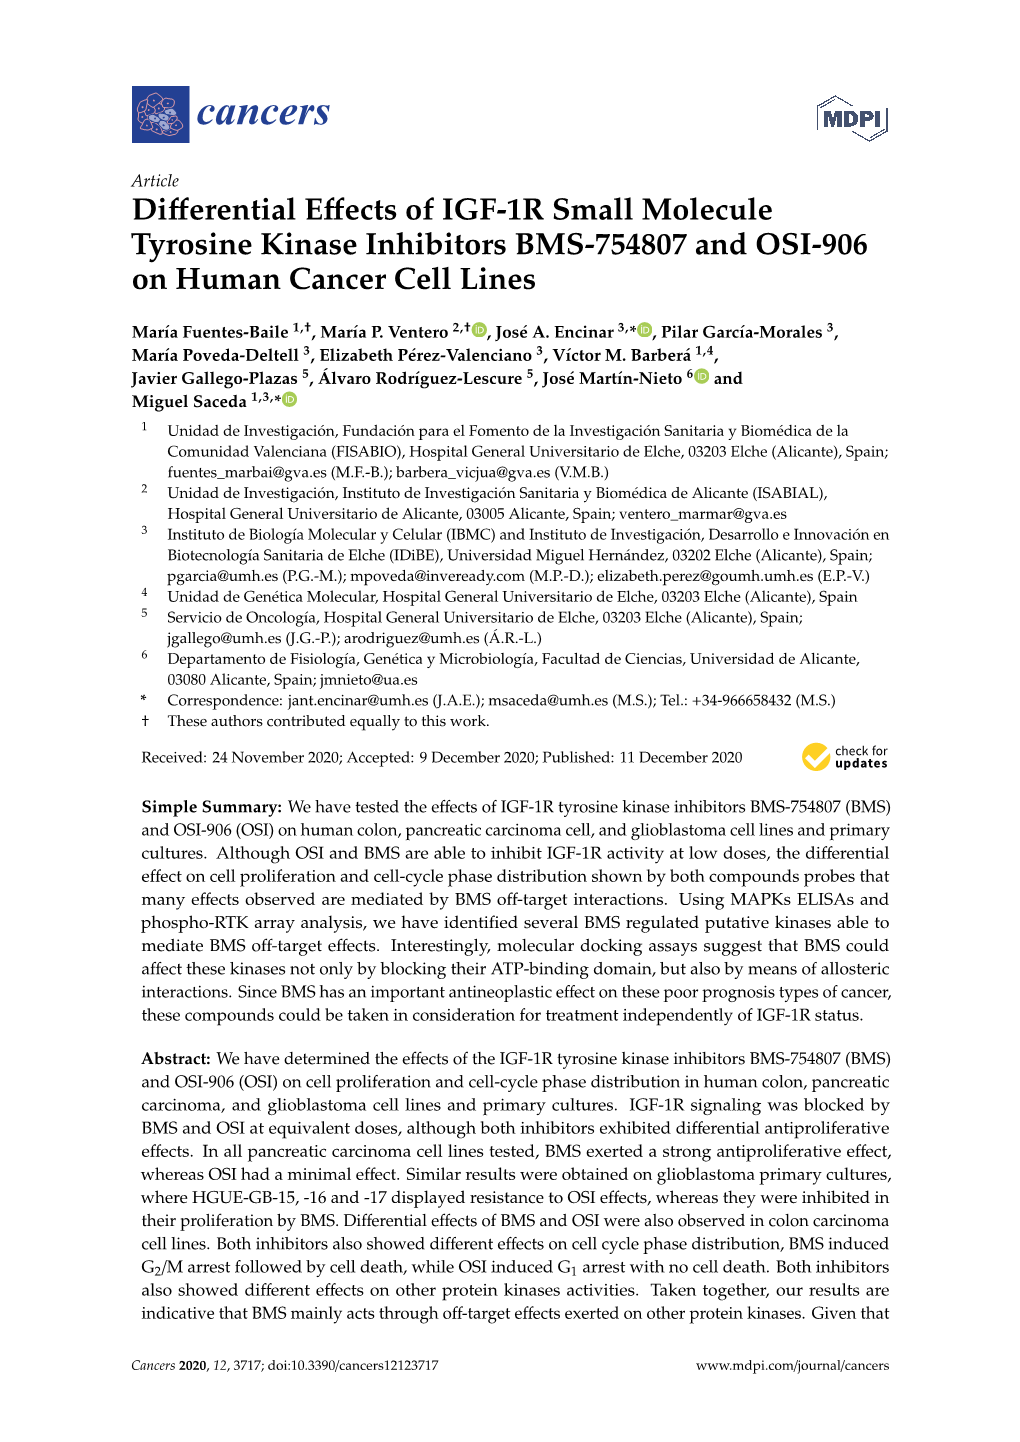 Differential Effects of IGF-1R Small Molecule Tyrosine Kinase Inhibitors